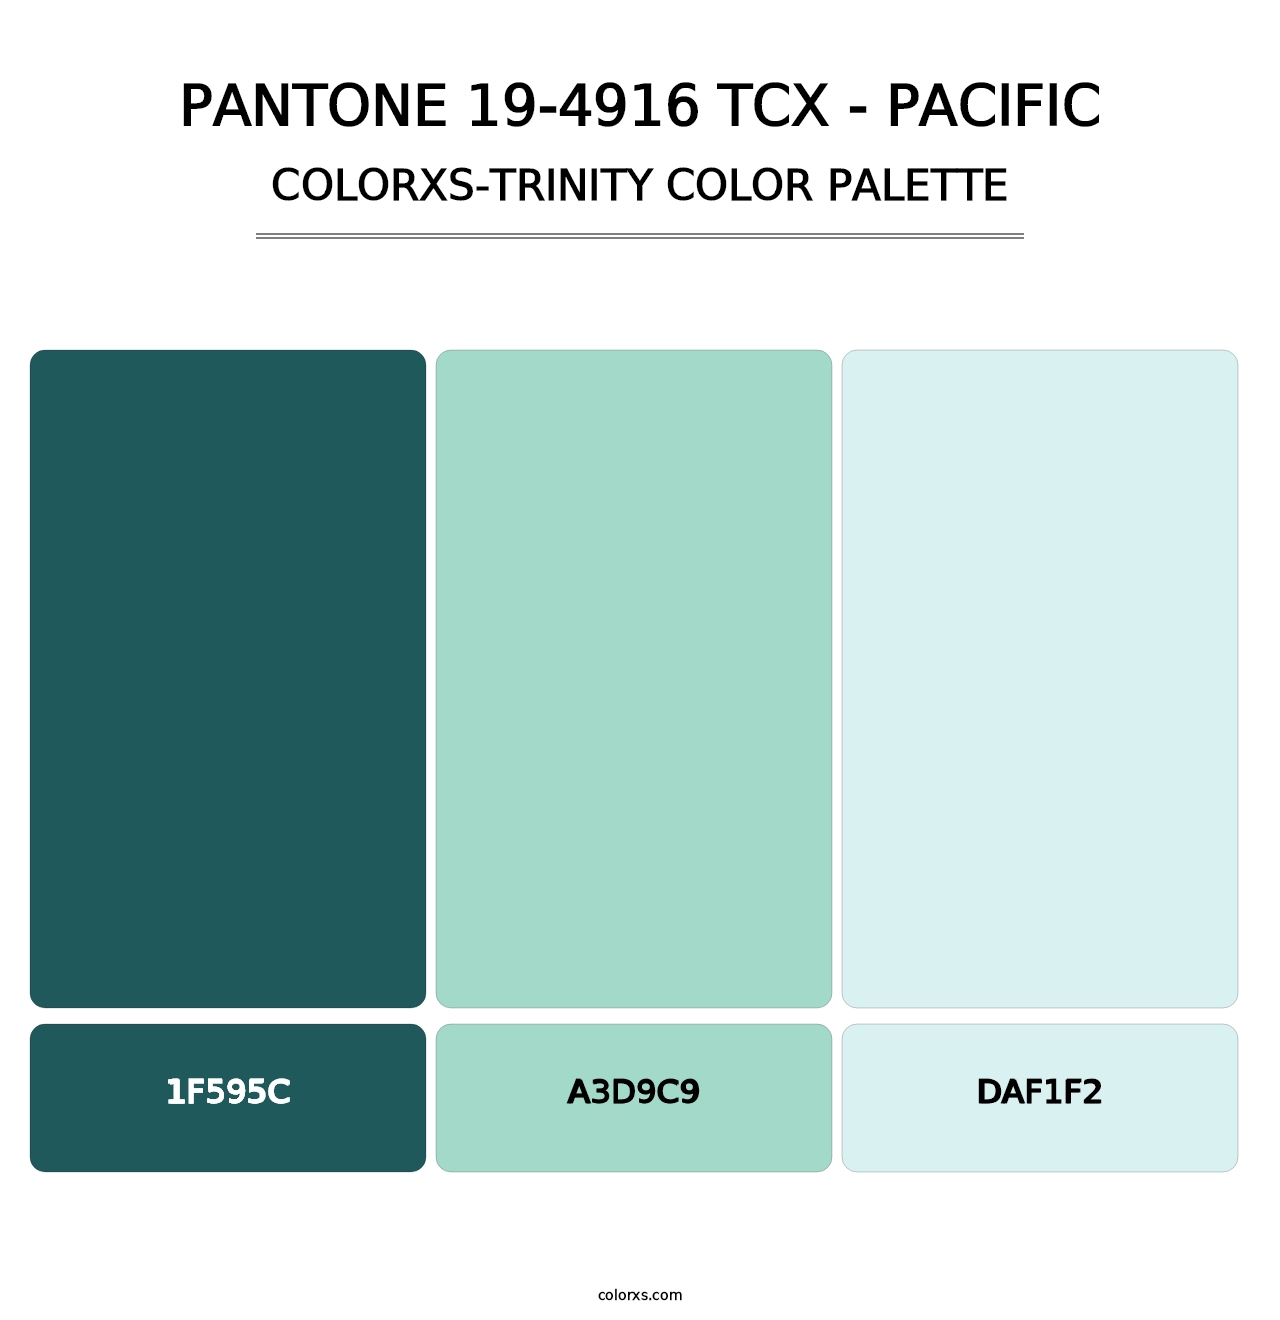 PANTONE 19-4916 TCX - Pacific - Colorxs Trinity Palette